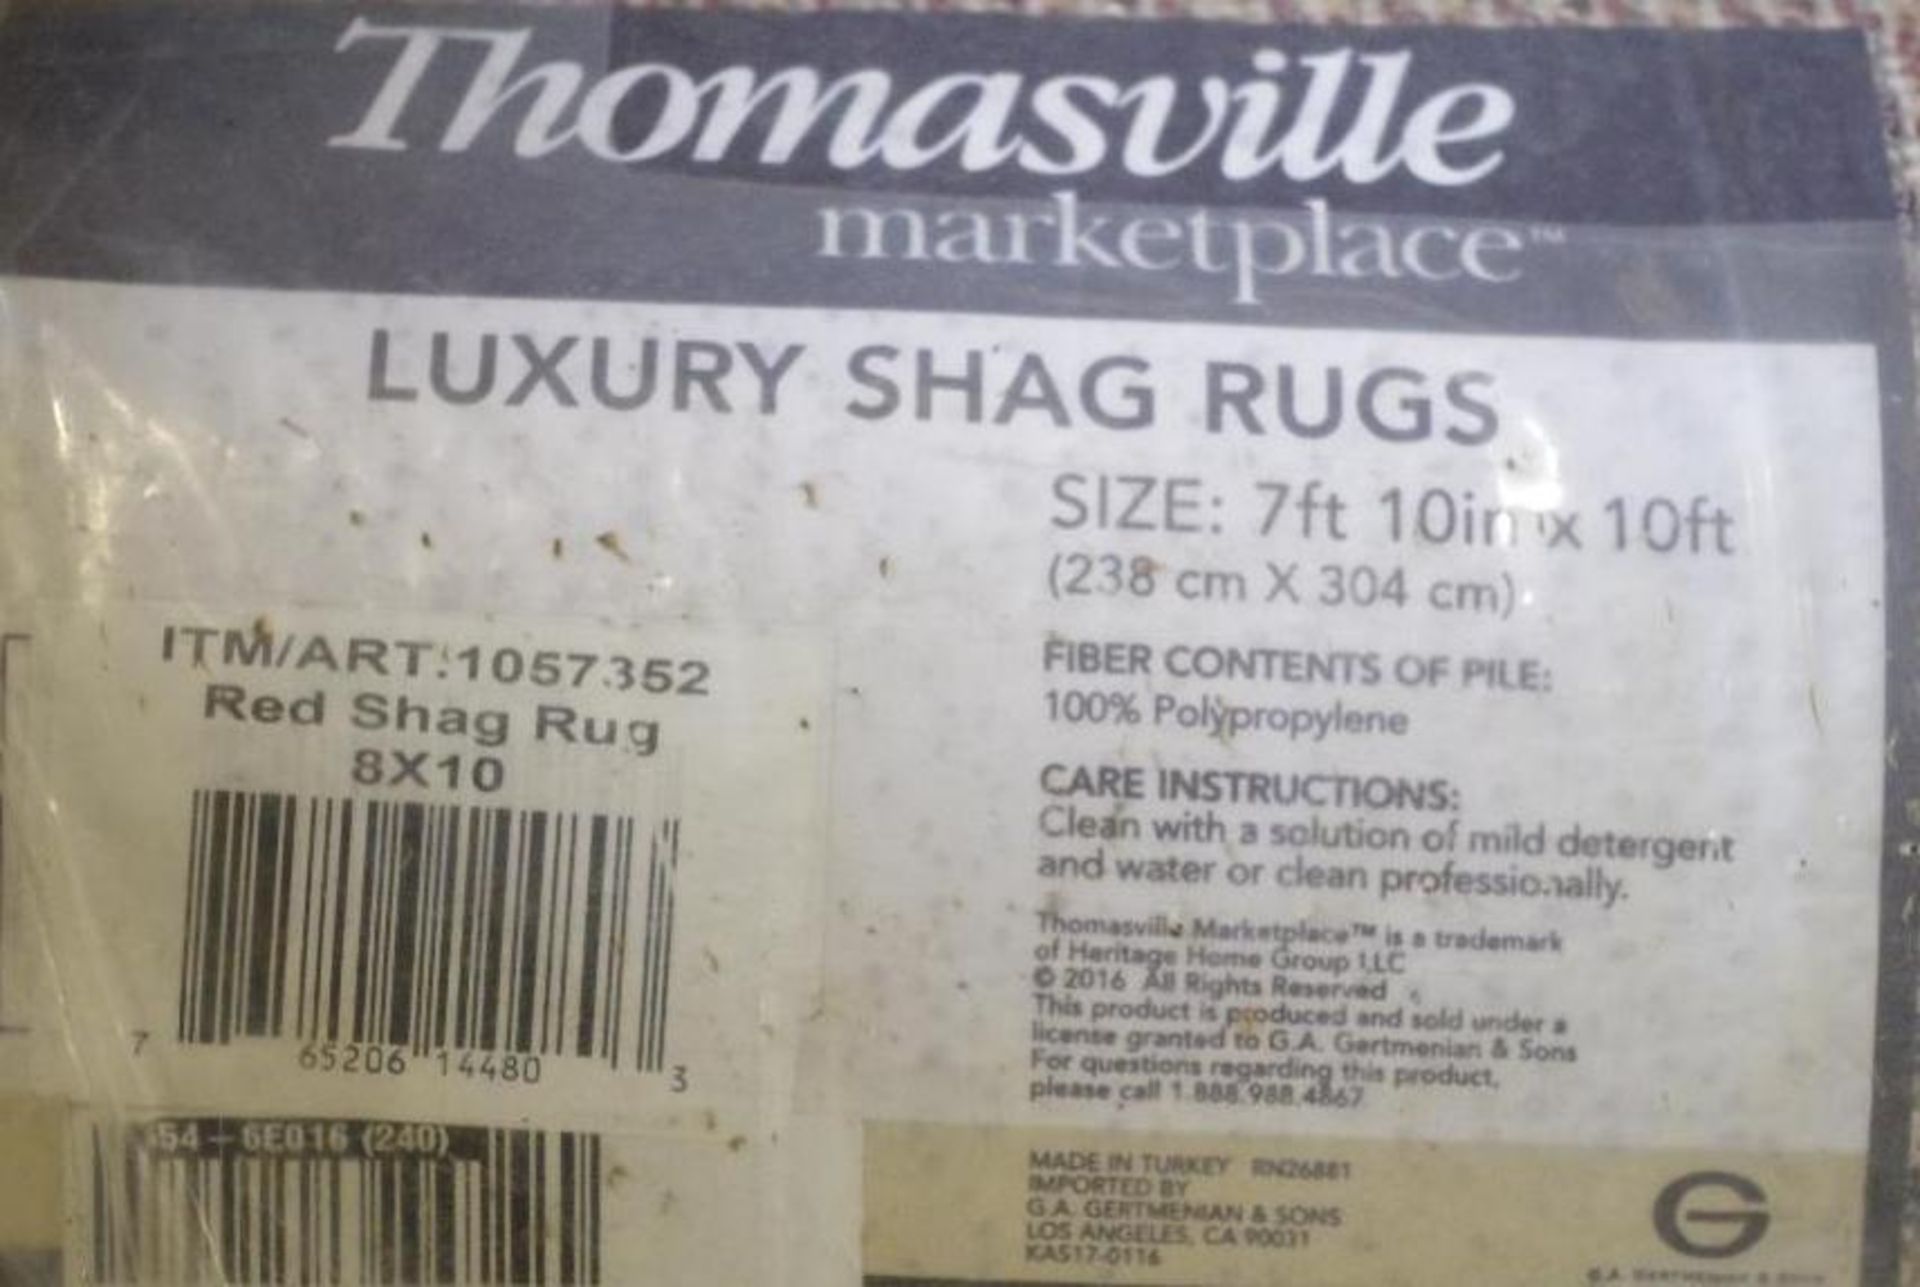 THOMASVILLE Luxury Shag Rug Size: 7'-10" x 10' (see description) - Image 3 of 3